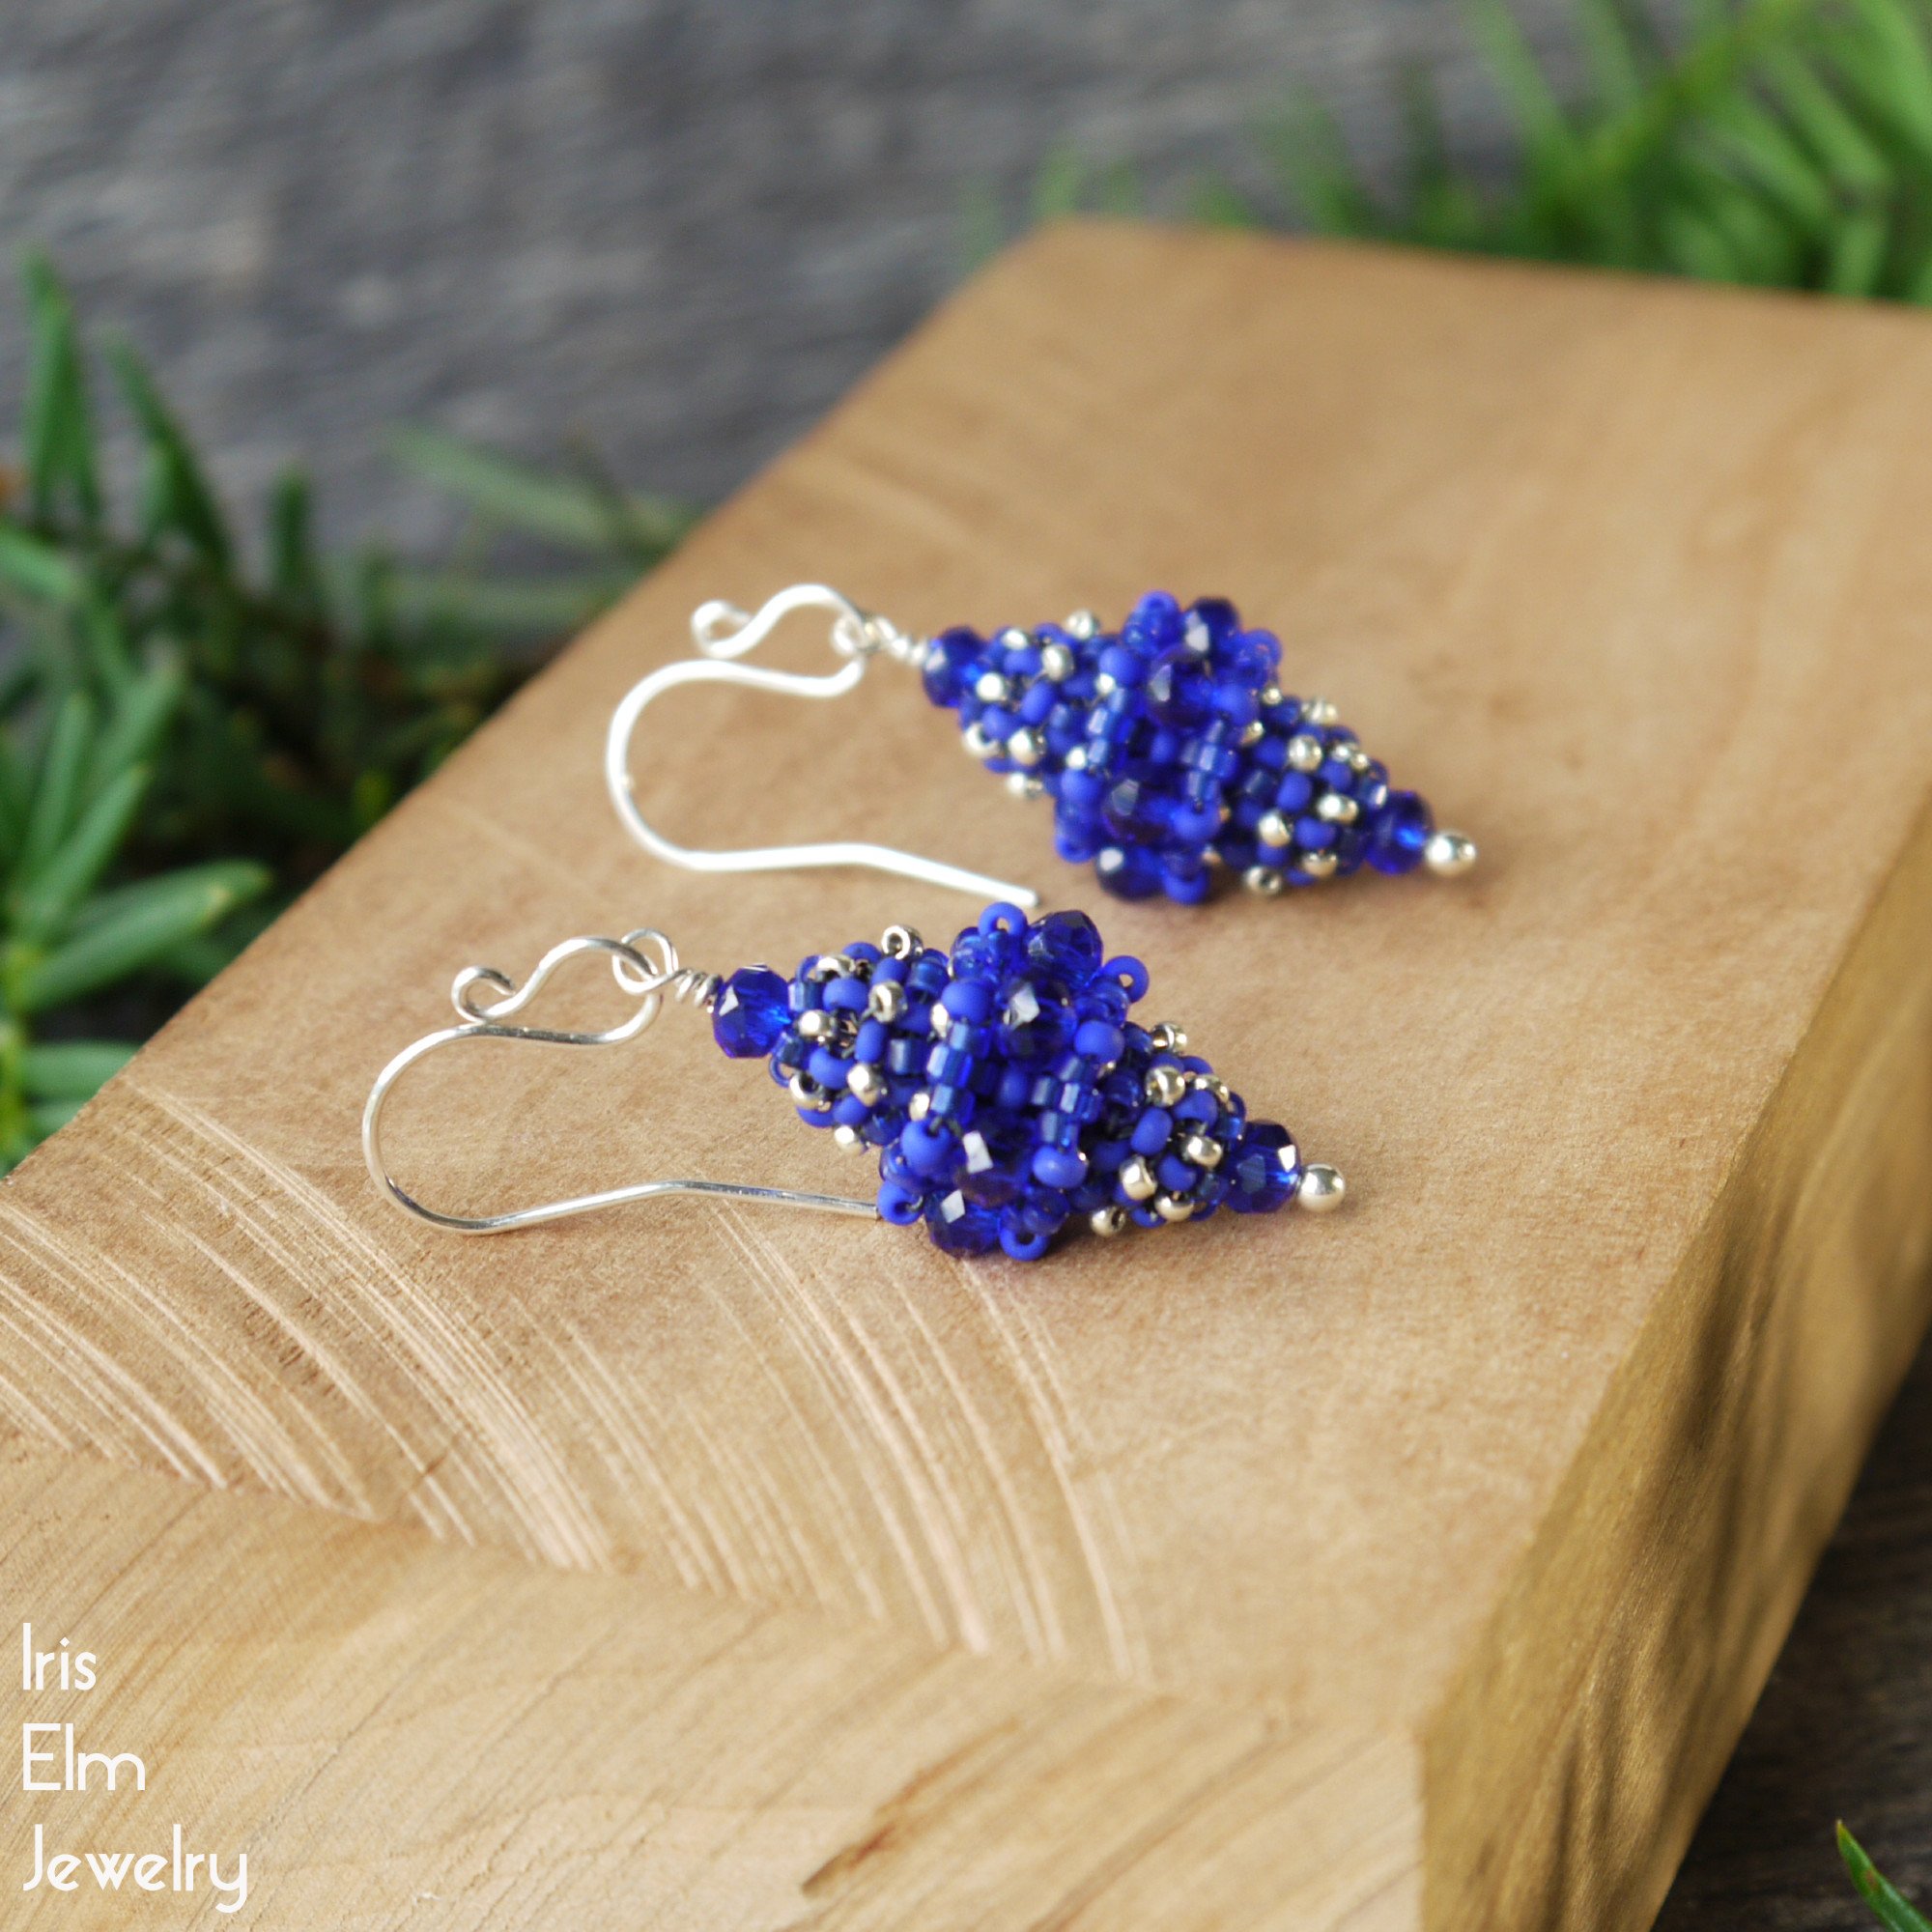 108te cobalt blue beaded bead glass vintage style earrings sterling silver earwires handcrafted artisan jewelry